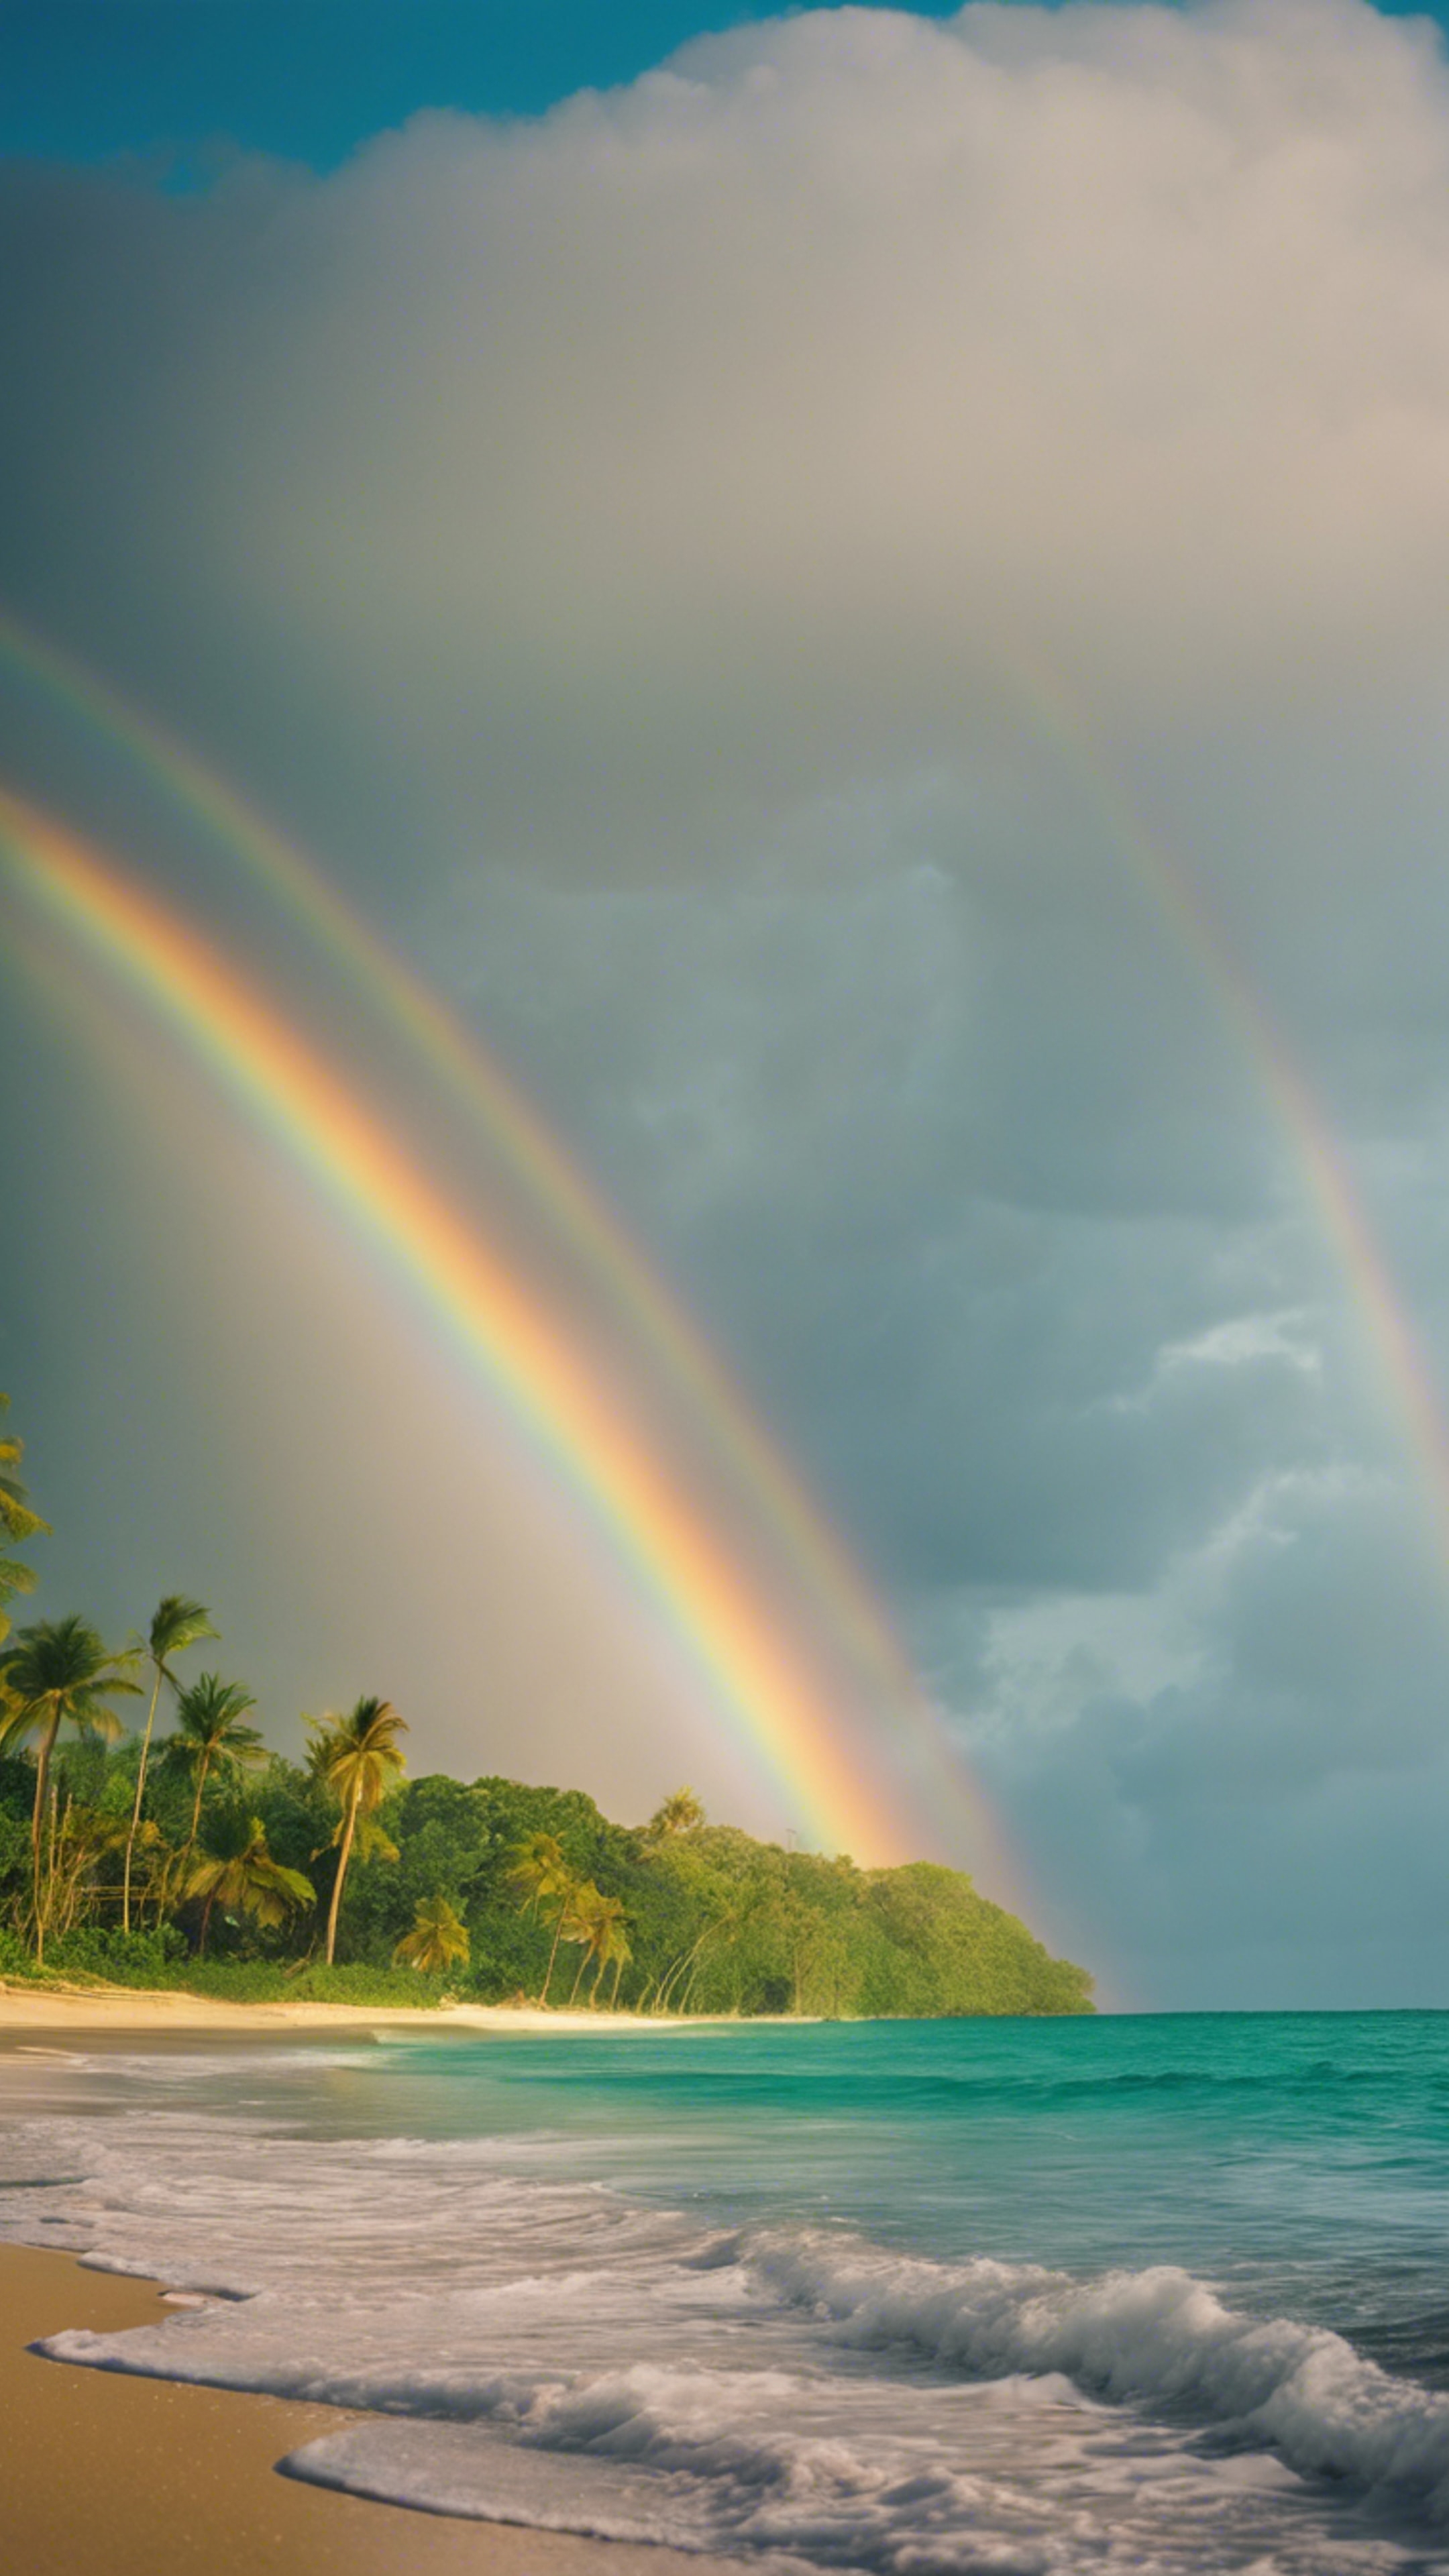 A double rainbow following a summer storm at a lush tropical beach. Wallpaper[dc773b9d67a34ffca127]